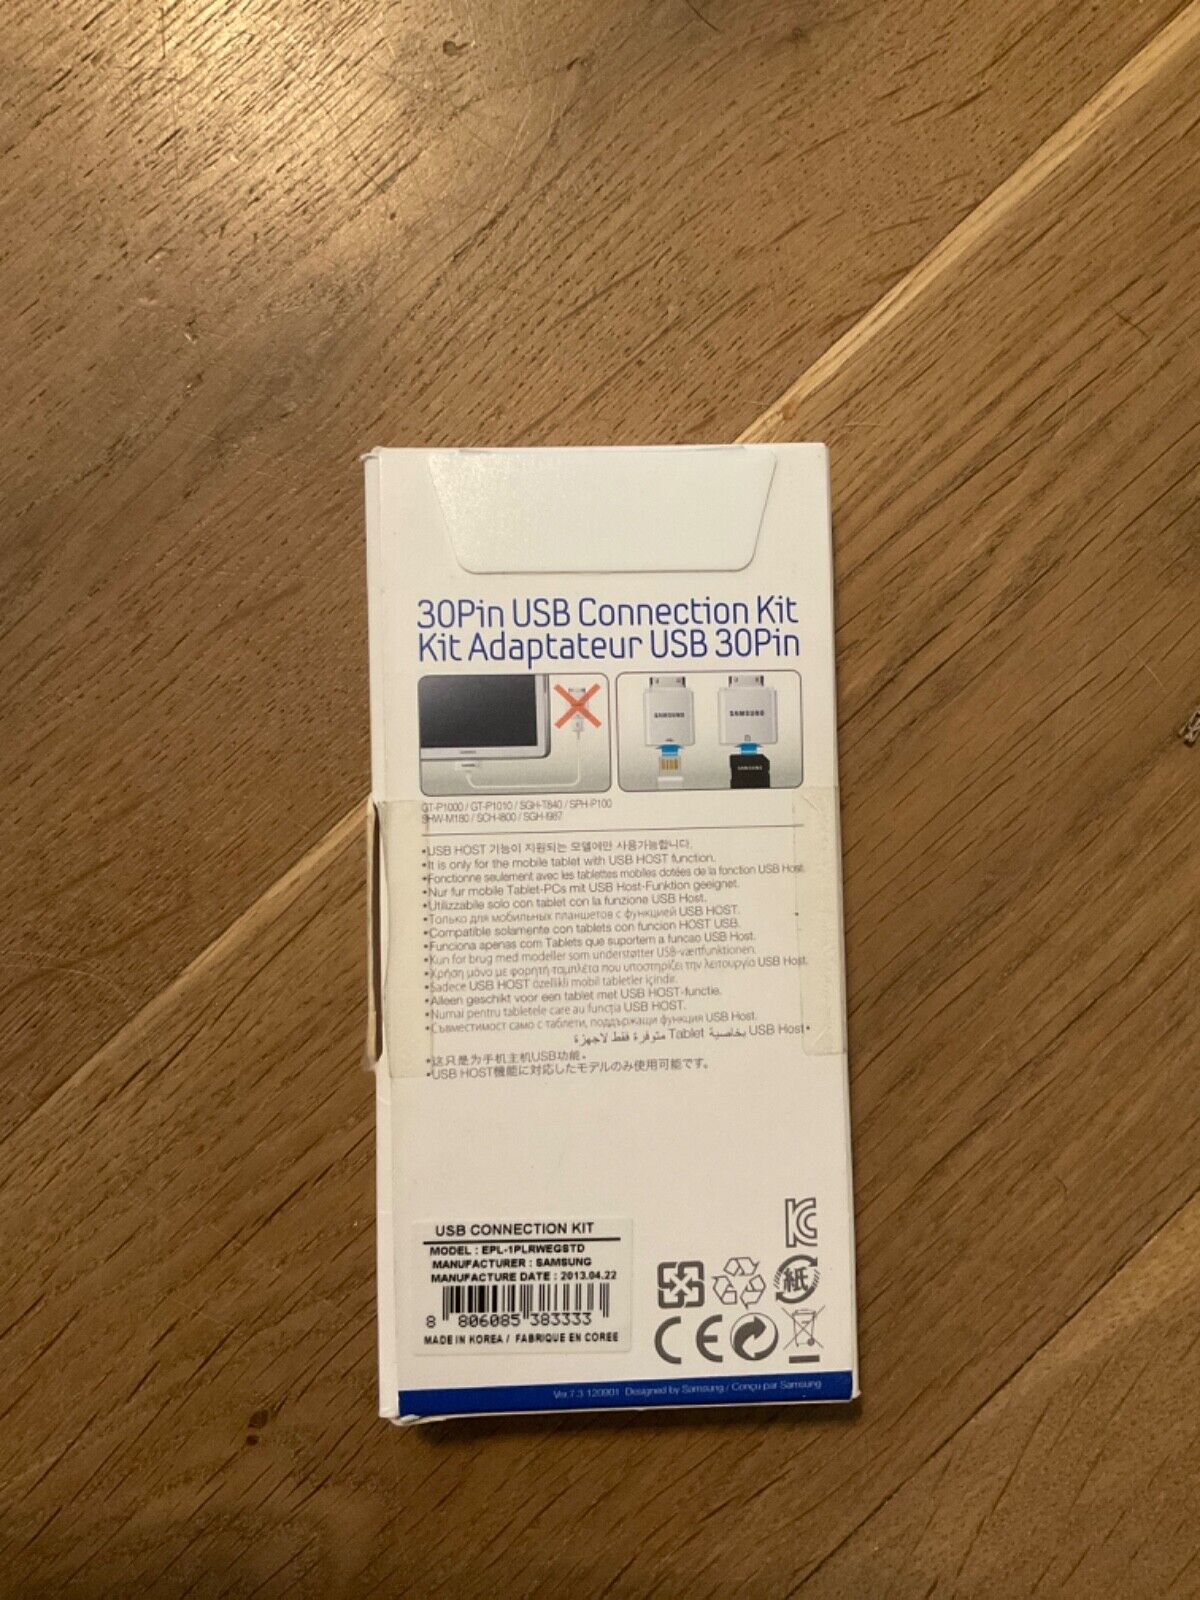 Samsung 30Pin USB connection kit like new